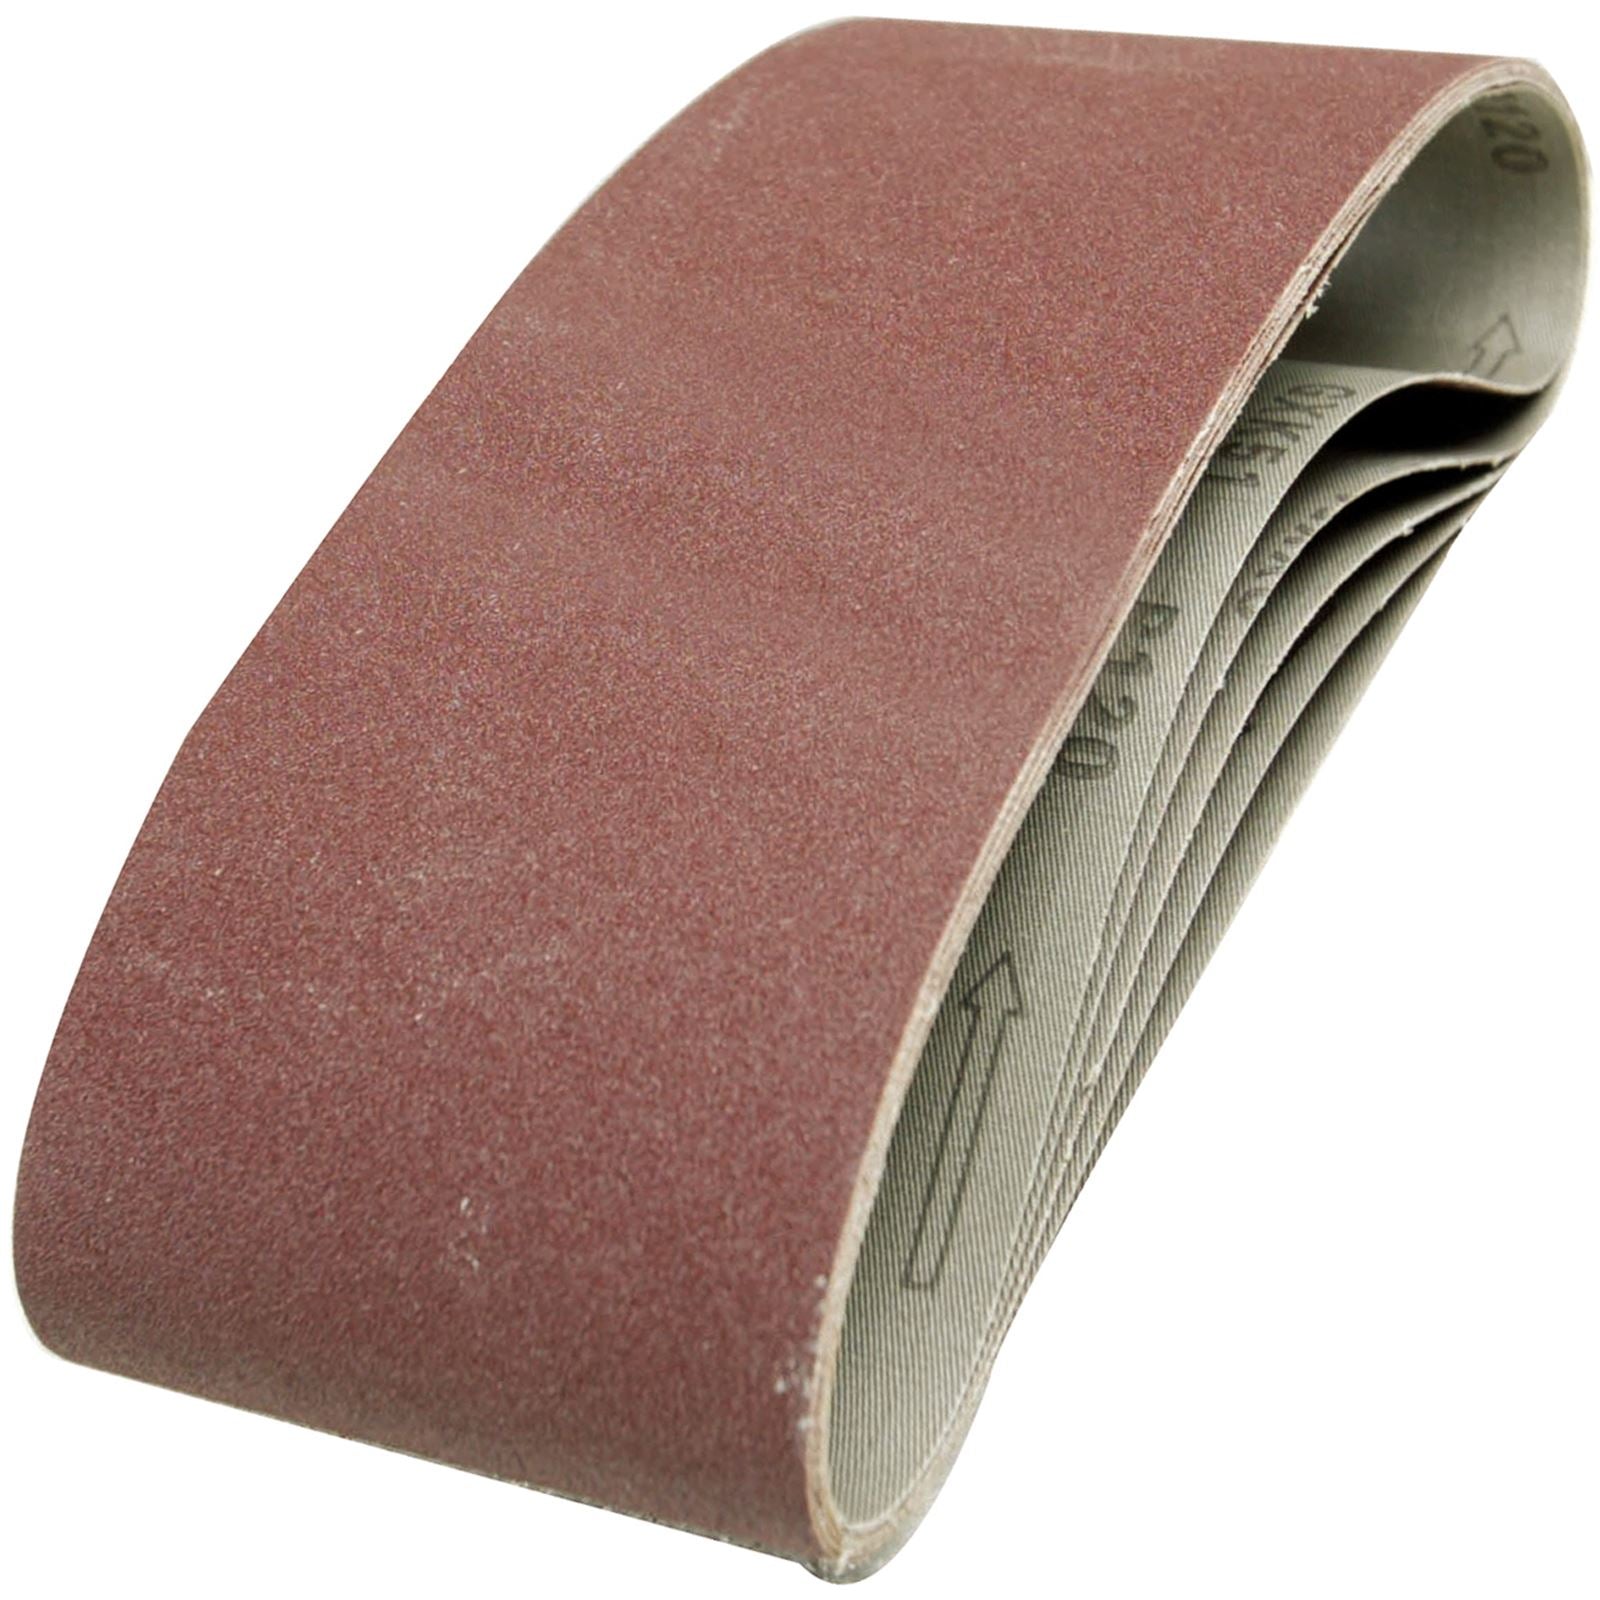 Silverline 5 Piece Aluminium Oxide Sanding Belts